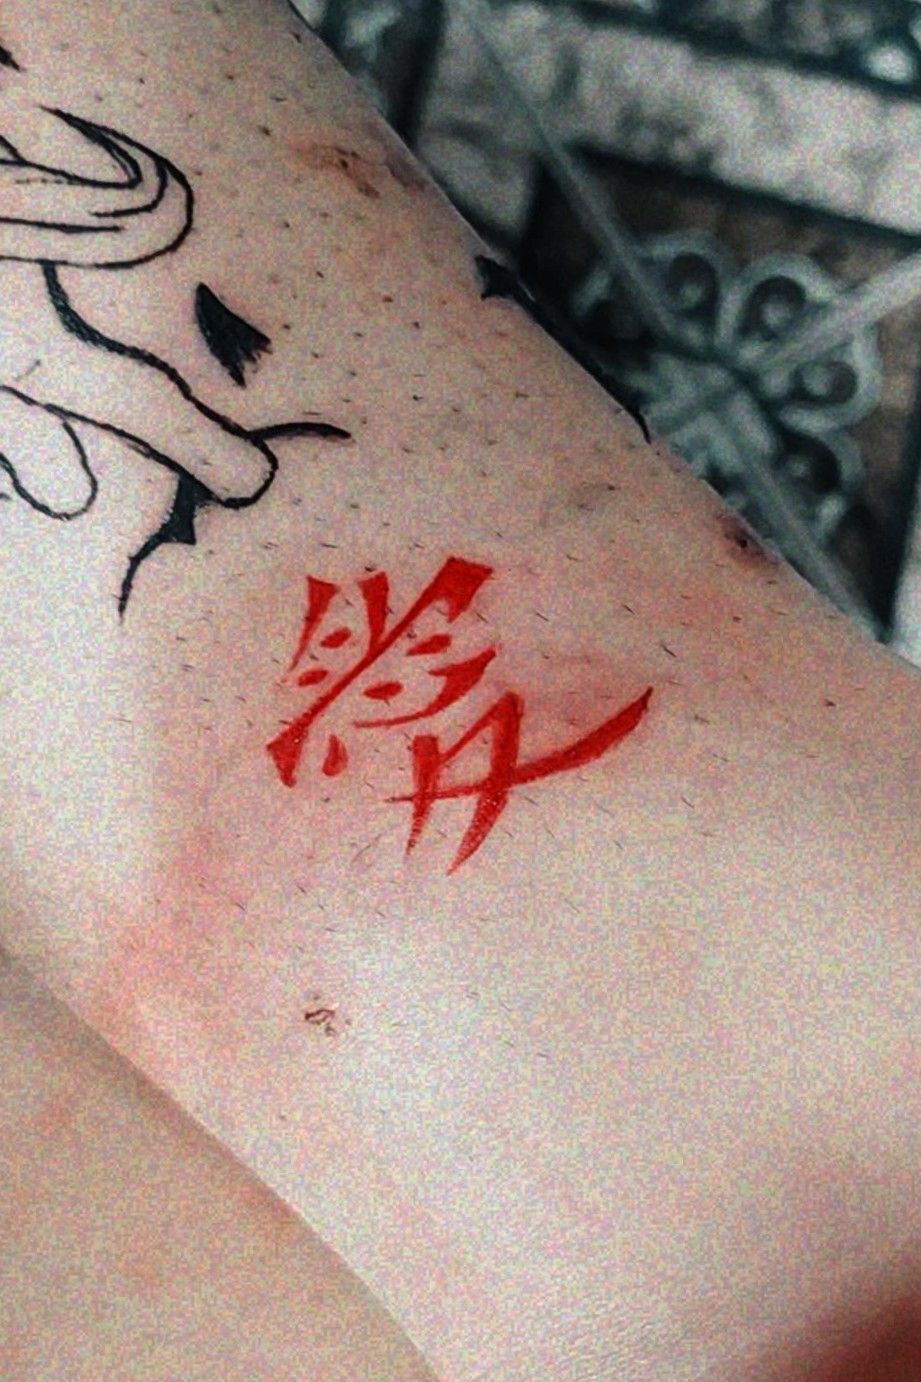 ًً on X: Um tweet pra exaltar minha tattoo (kanji igual o do Gaara)  Significa amor  / X